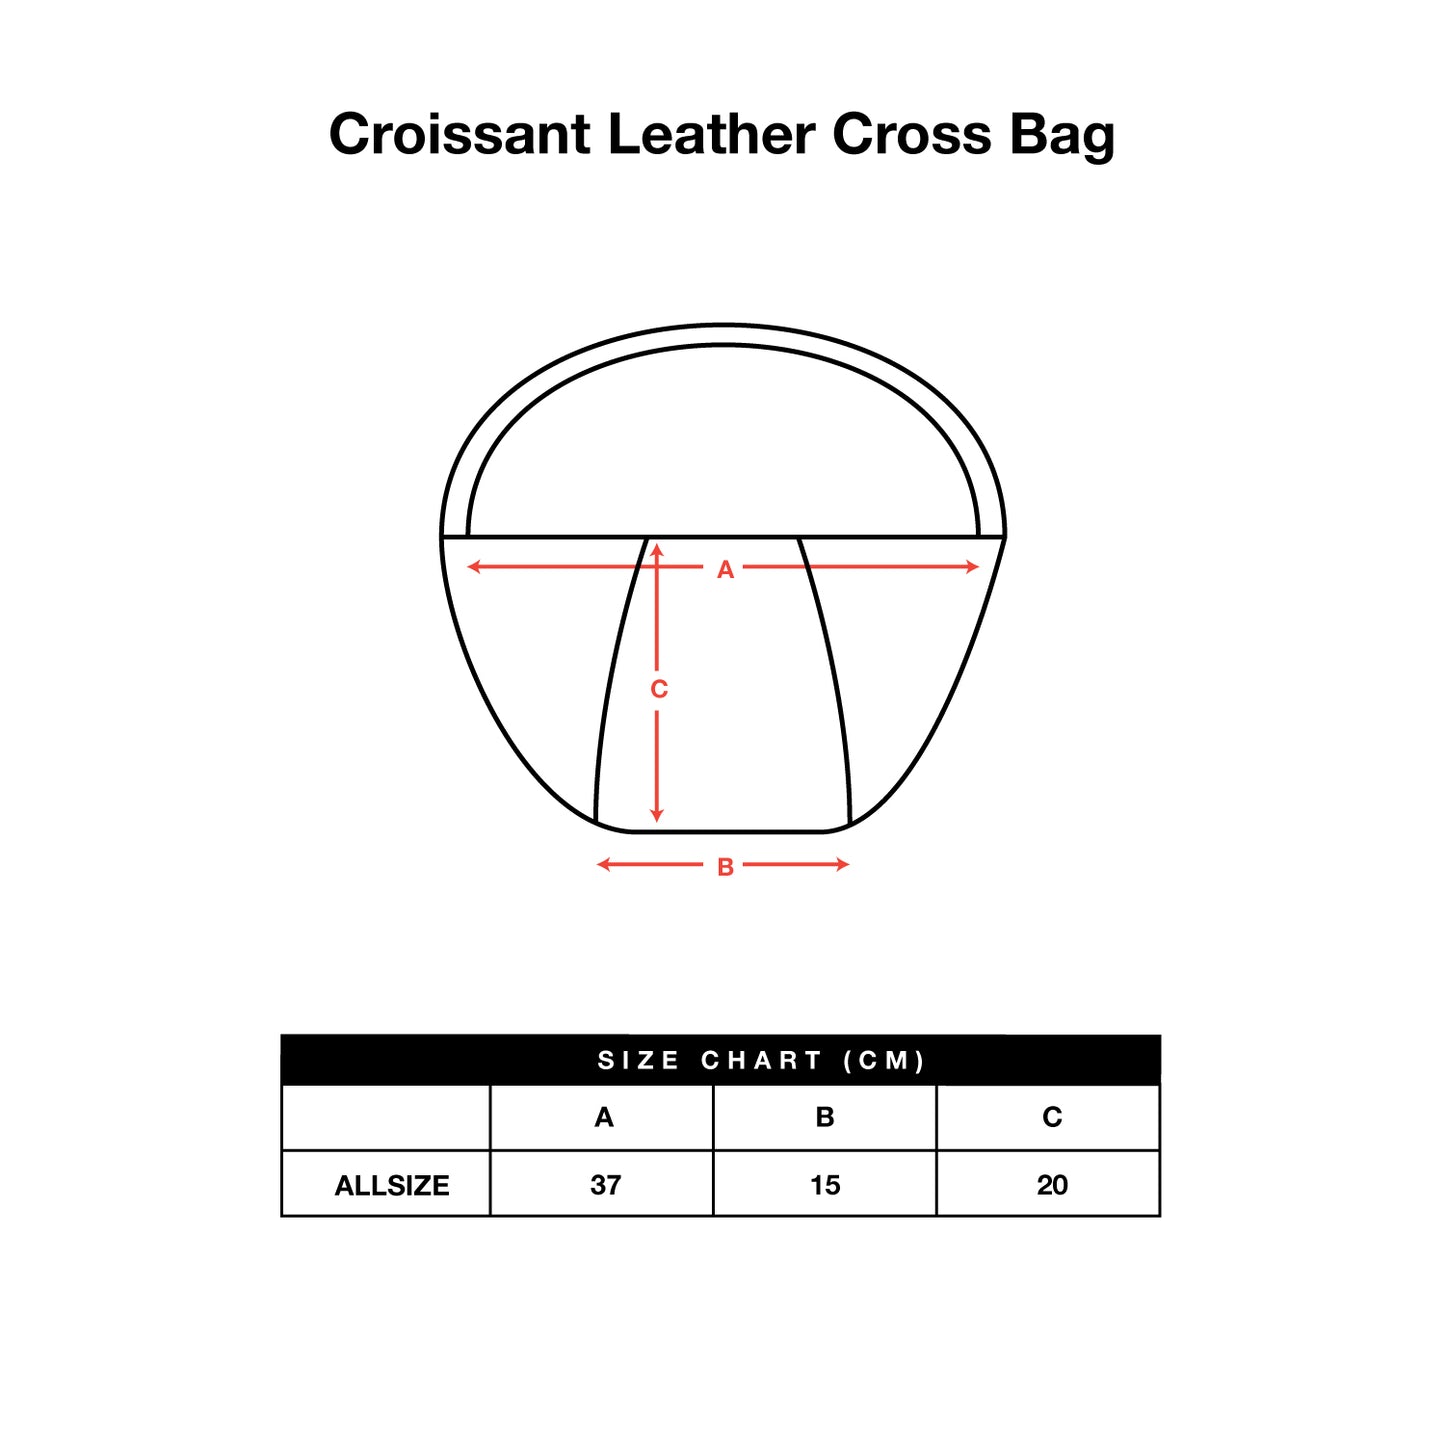 Croissant Leather Cross Bag